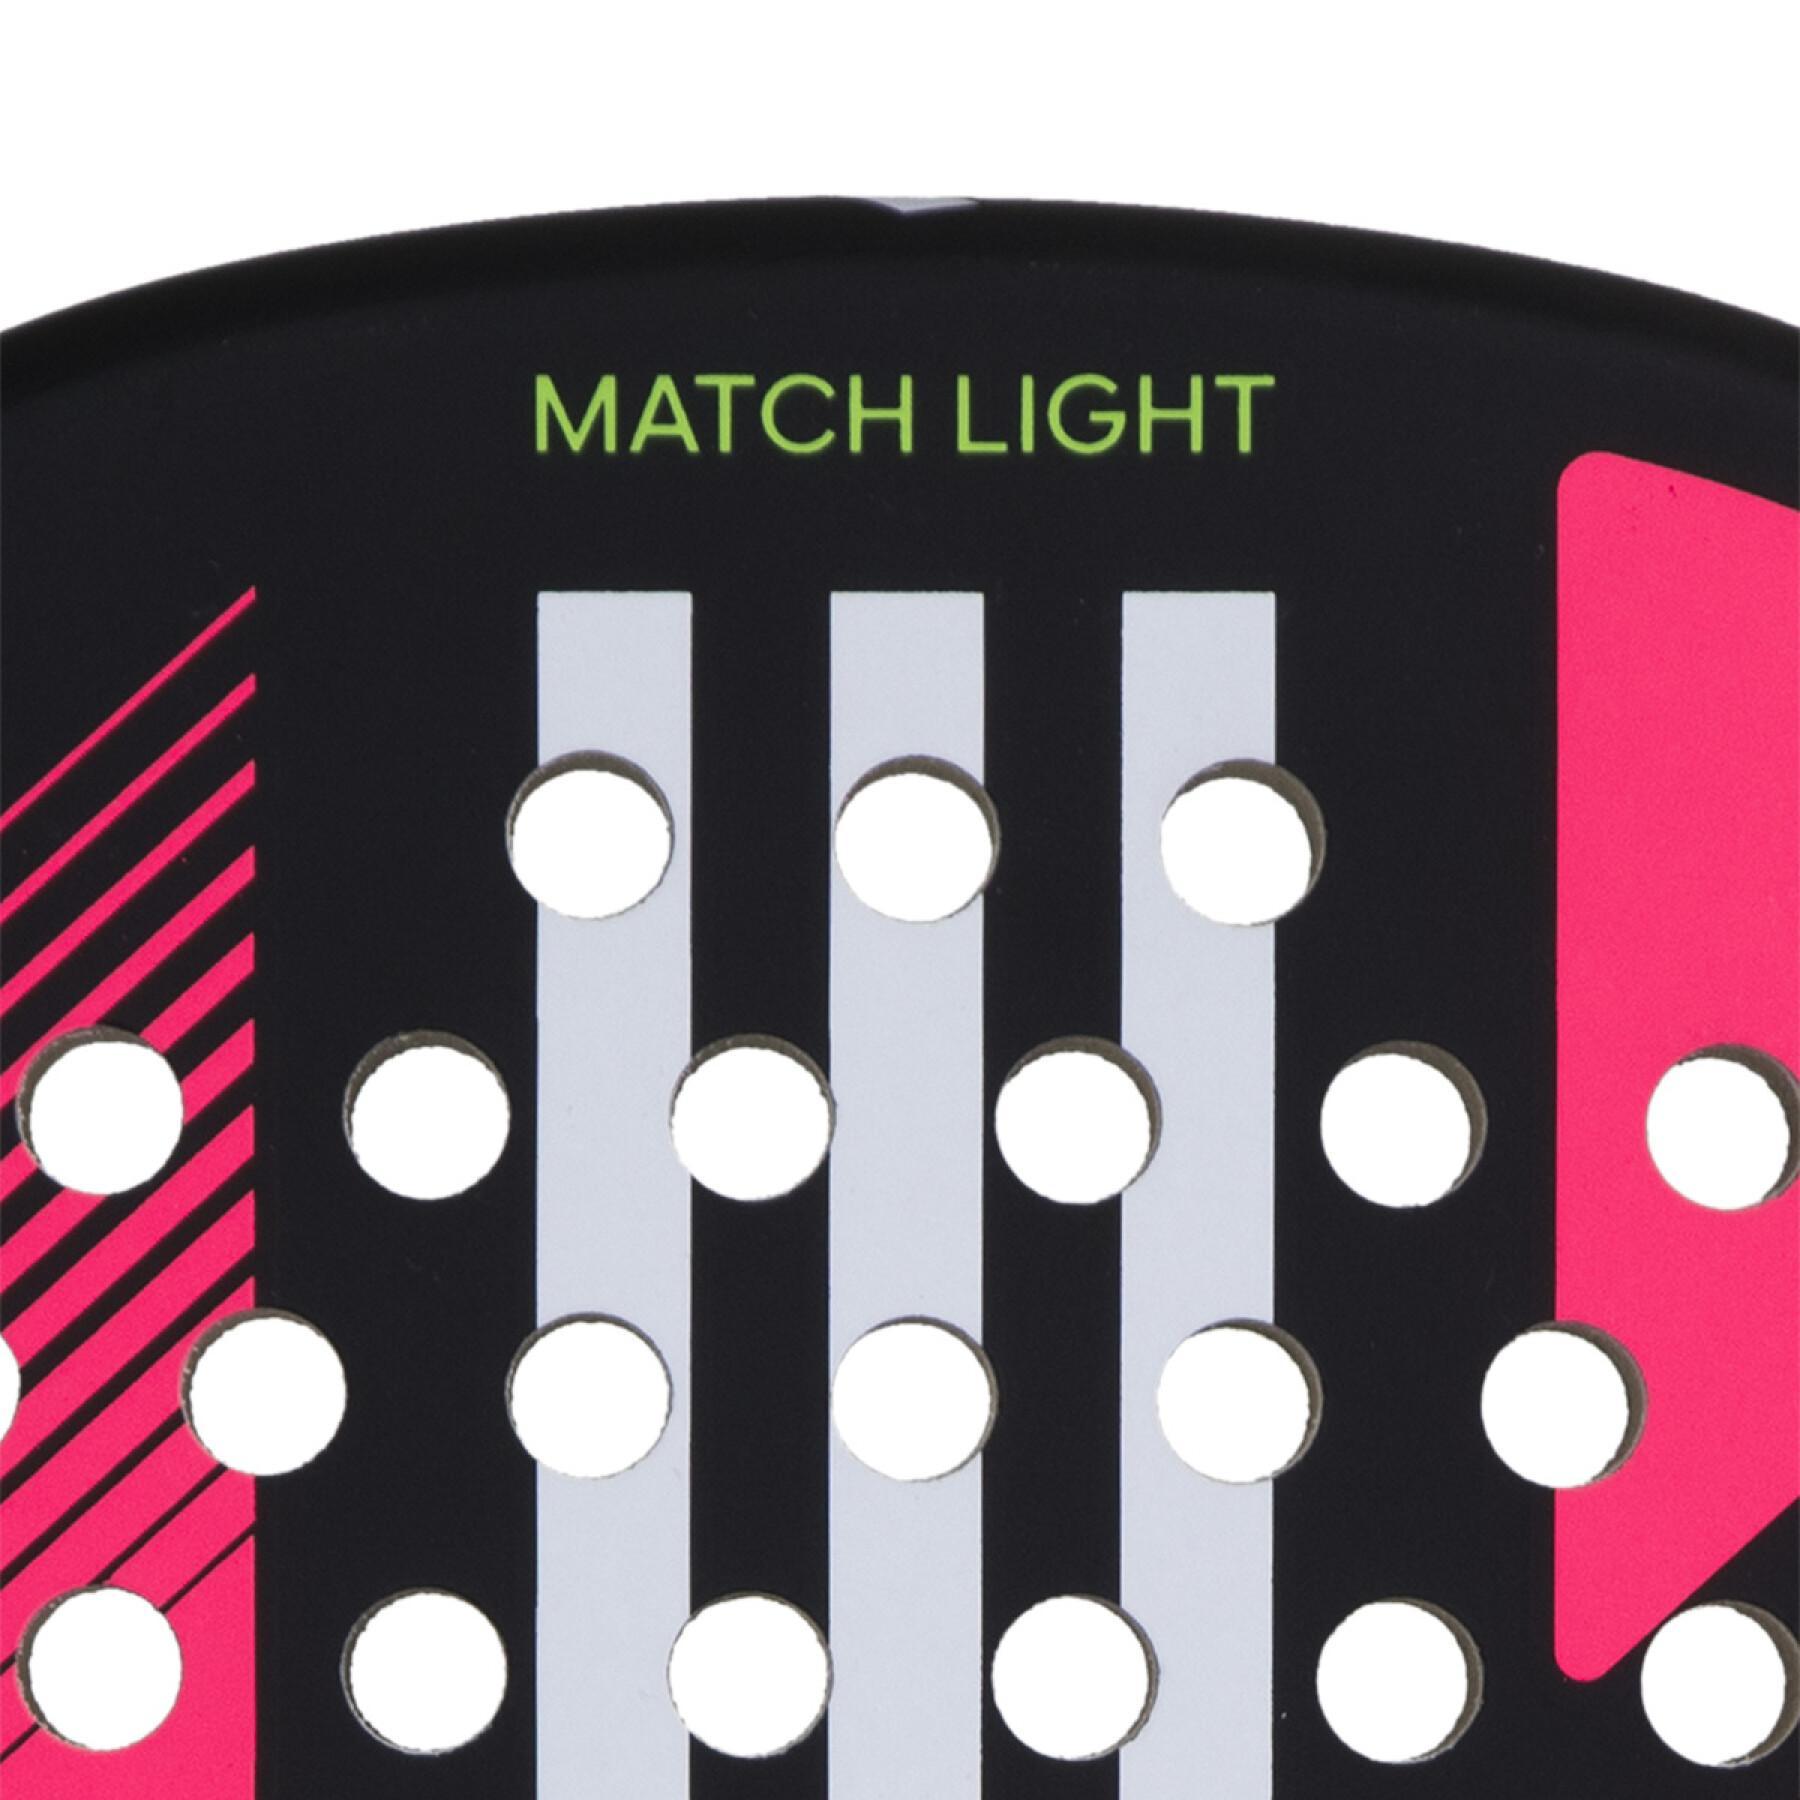 Racket from padel adidas Match Light 3.2